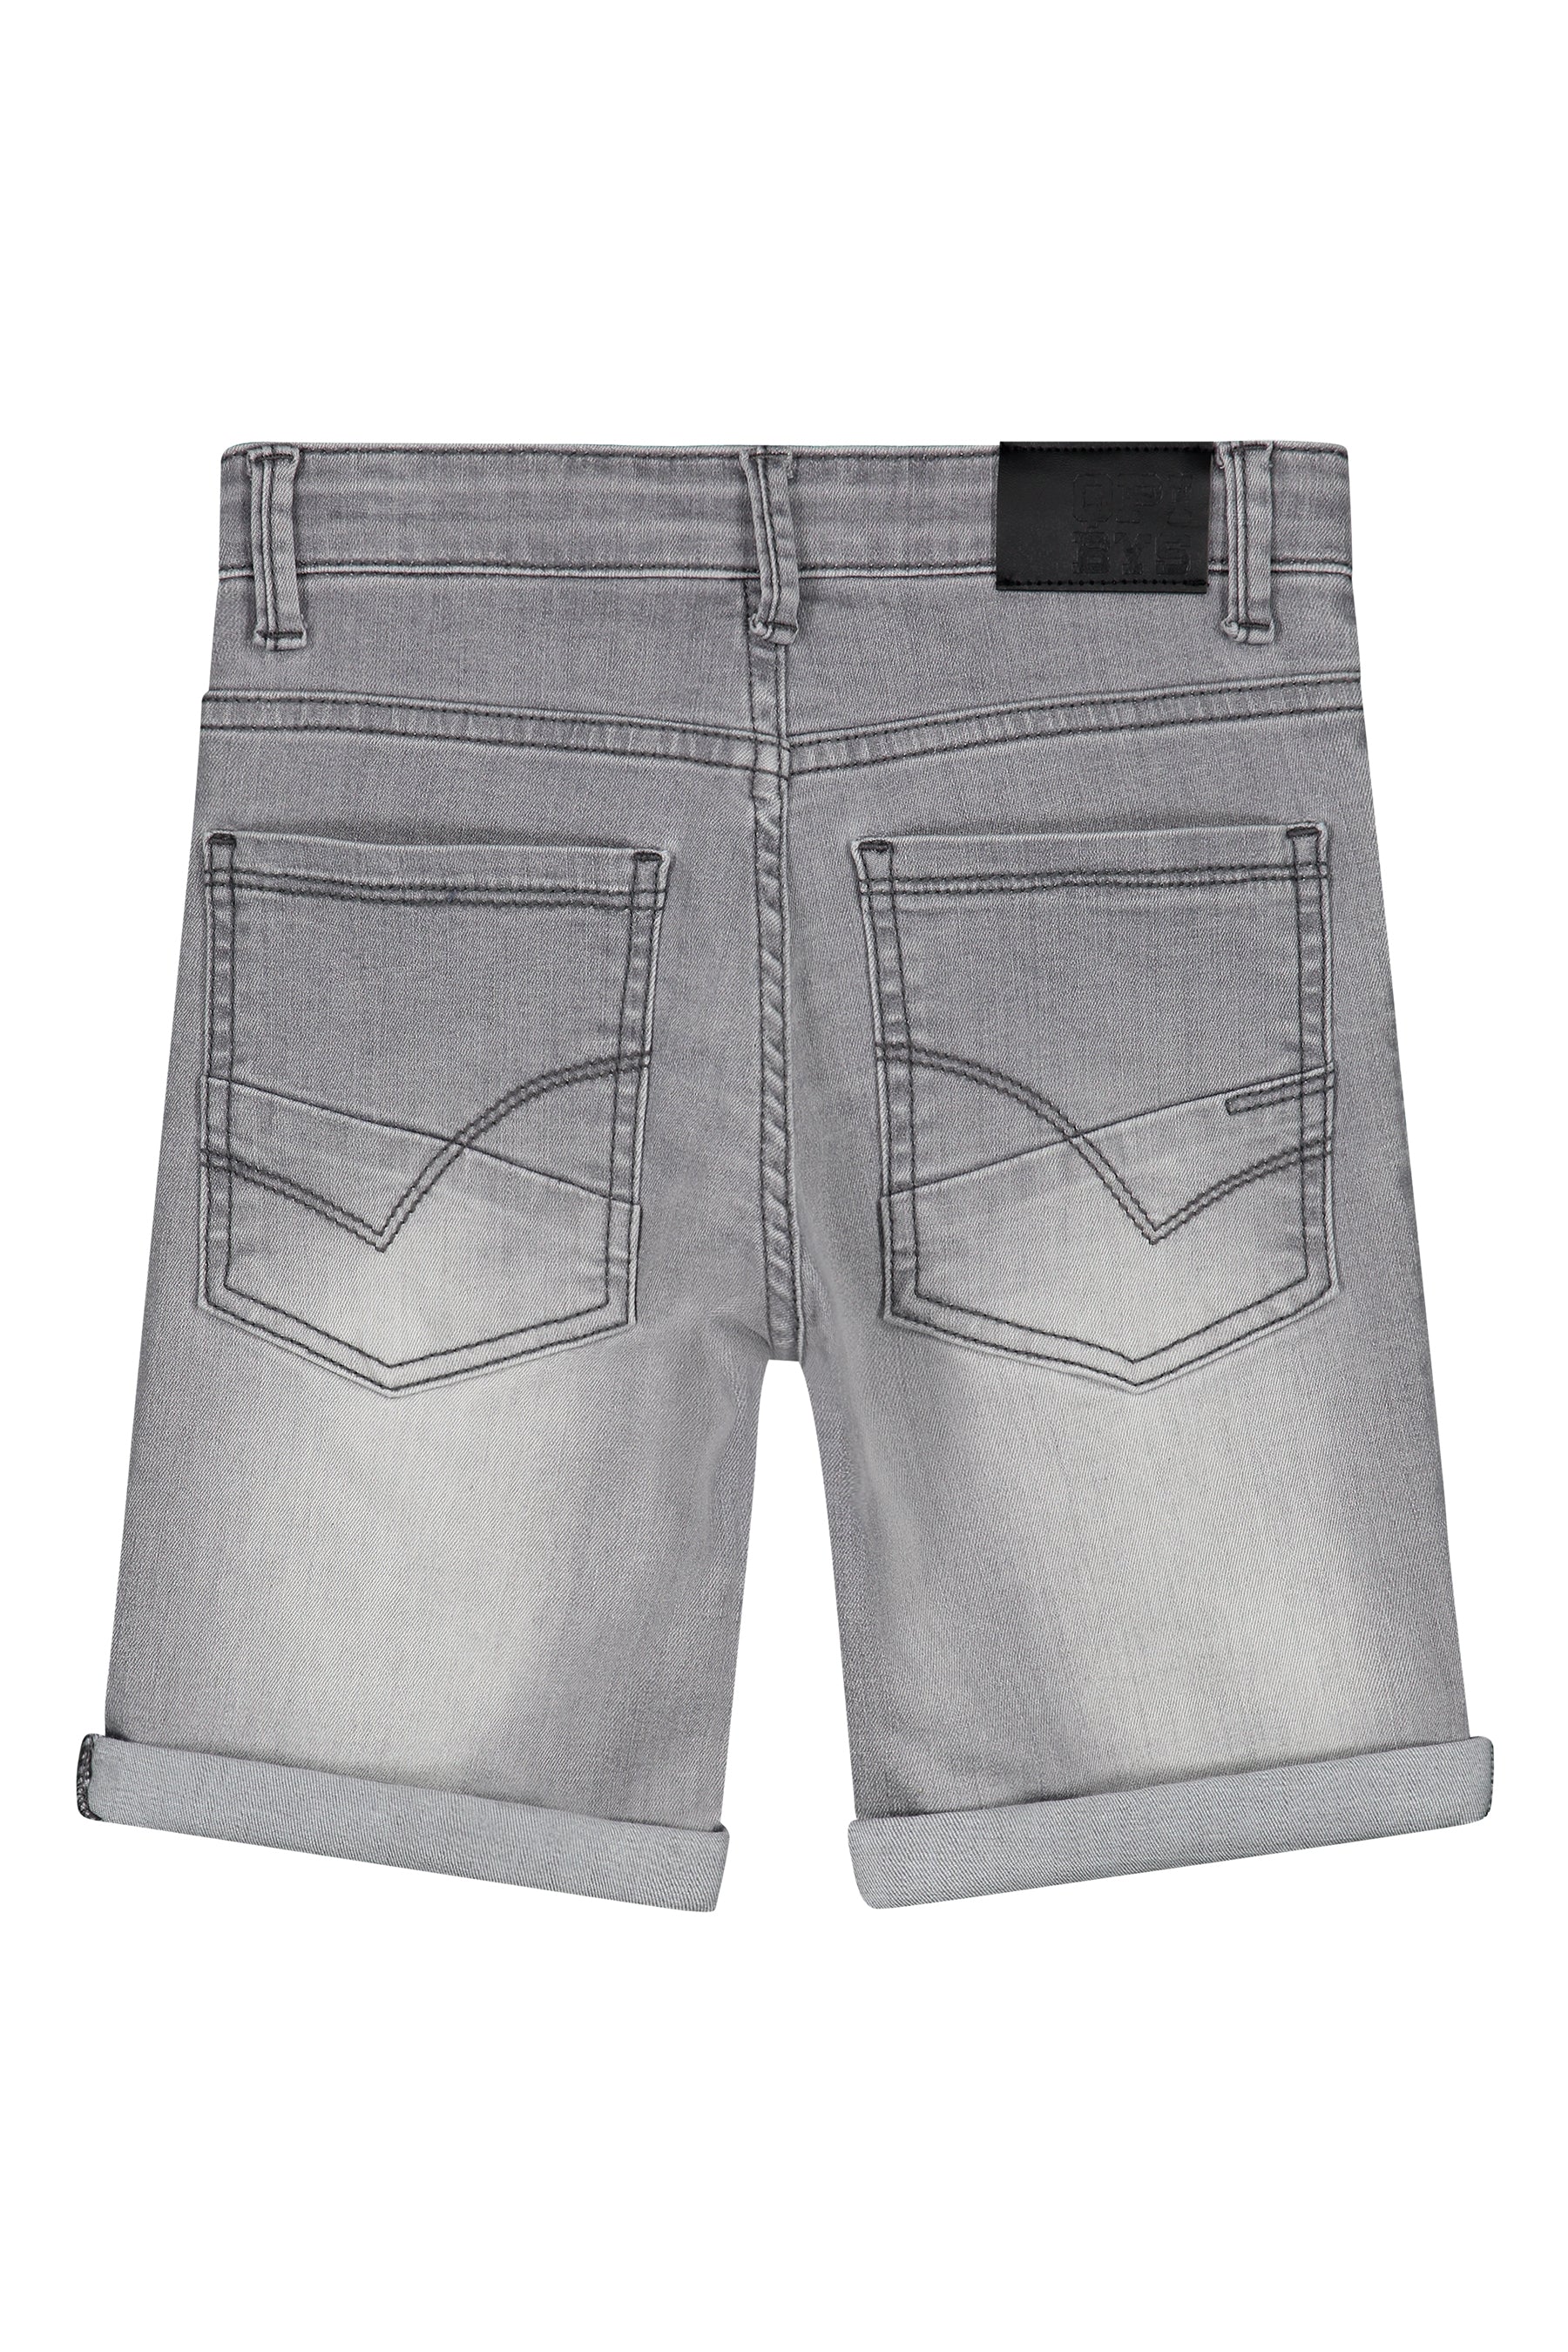 Quapi Jeans short Arjan S203